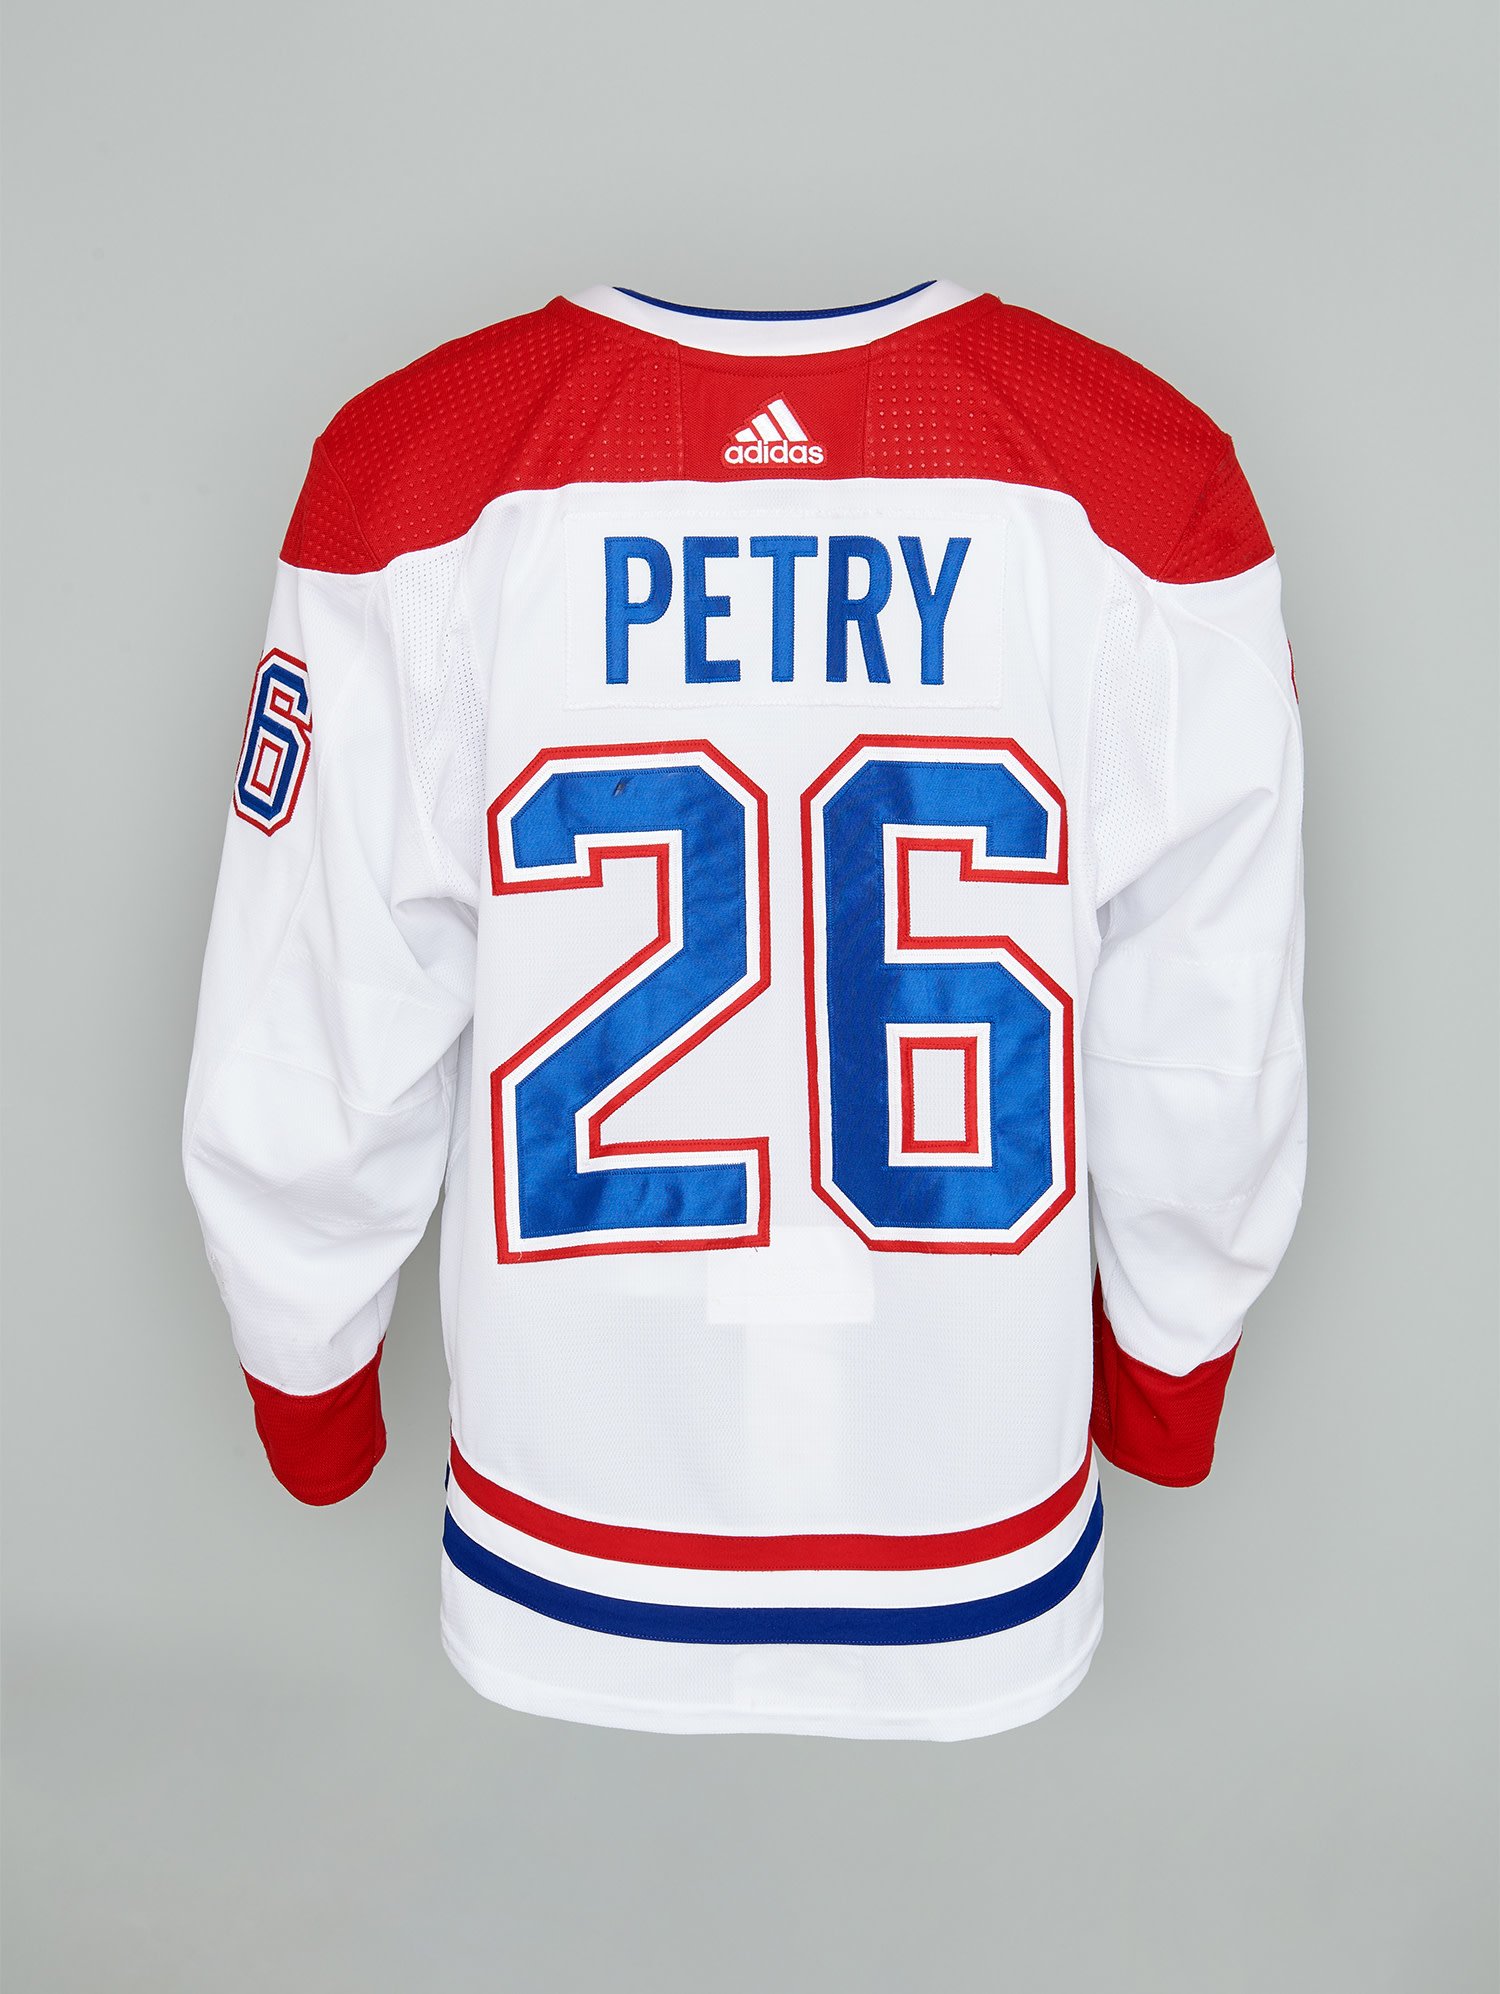 jeff petry jersey